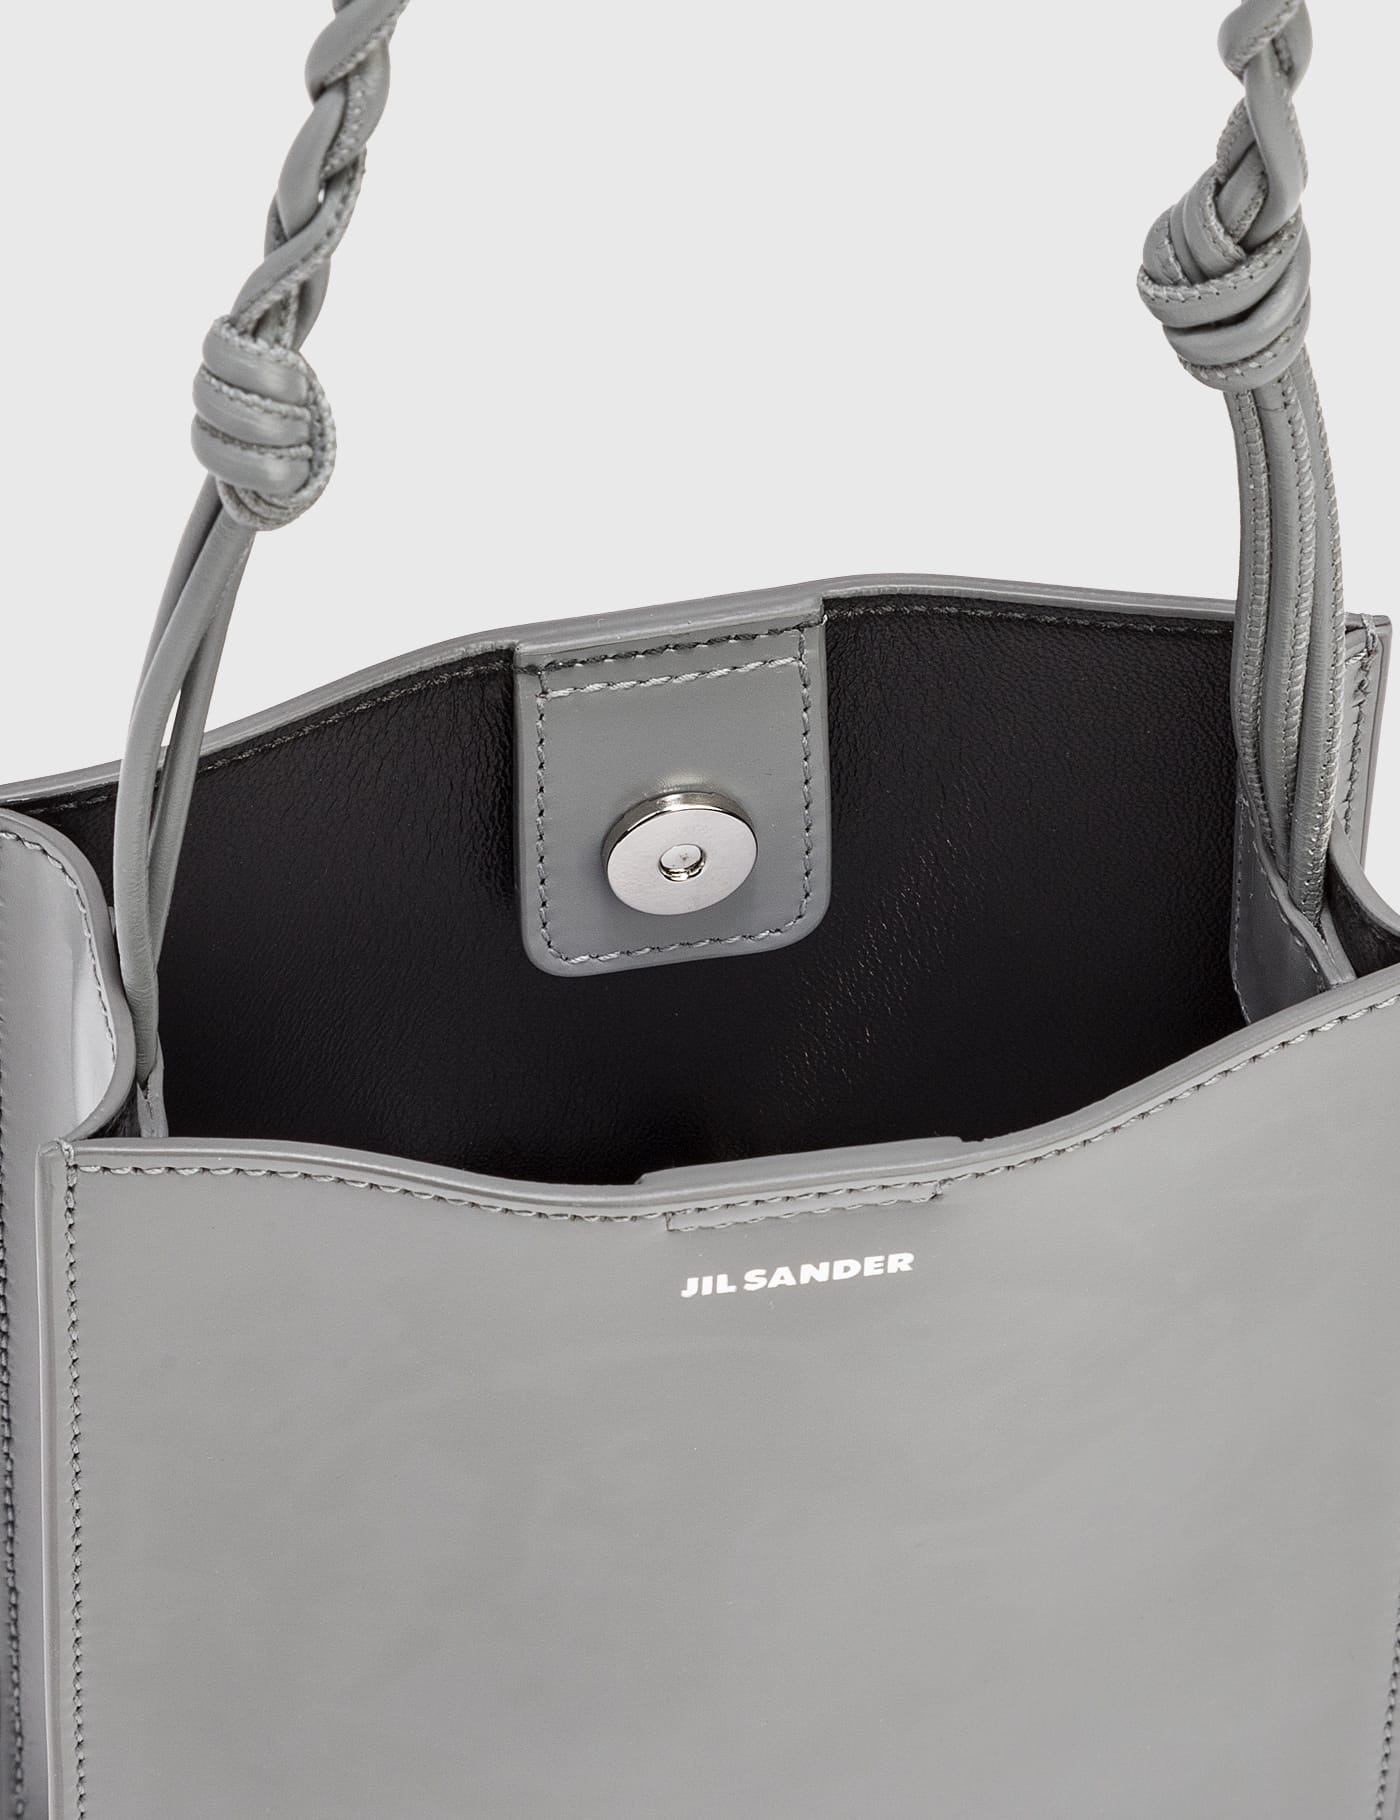 Jil Sander - Tangle Small Bag | HBX - HYPEBEAST 為您搜羅全球潮流時尚品牌